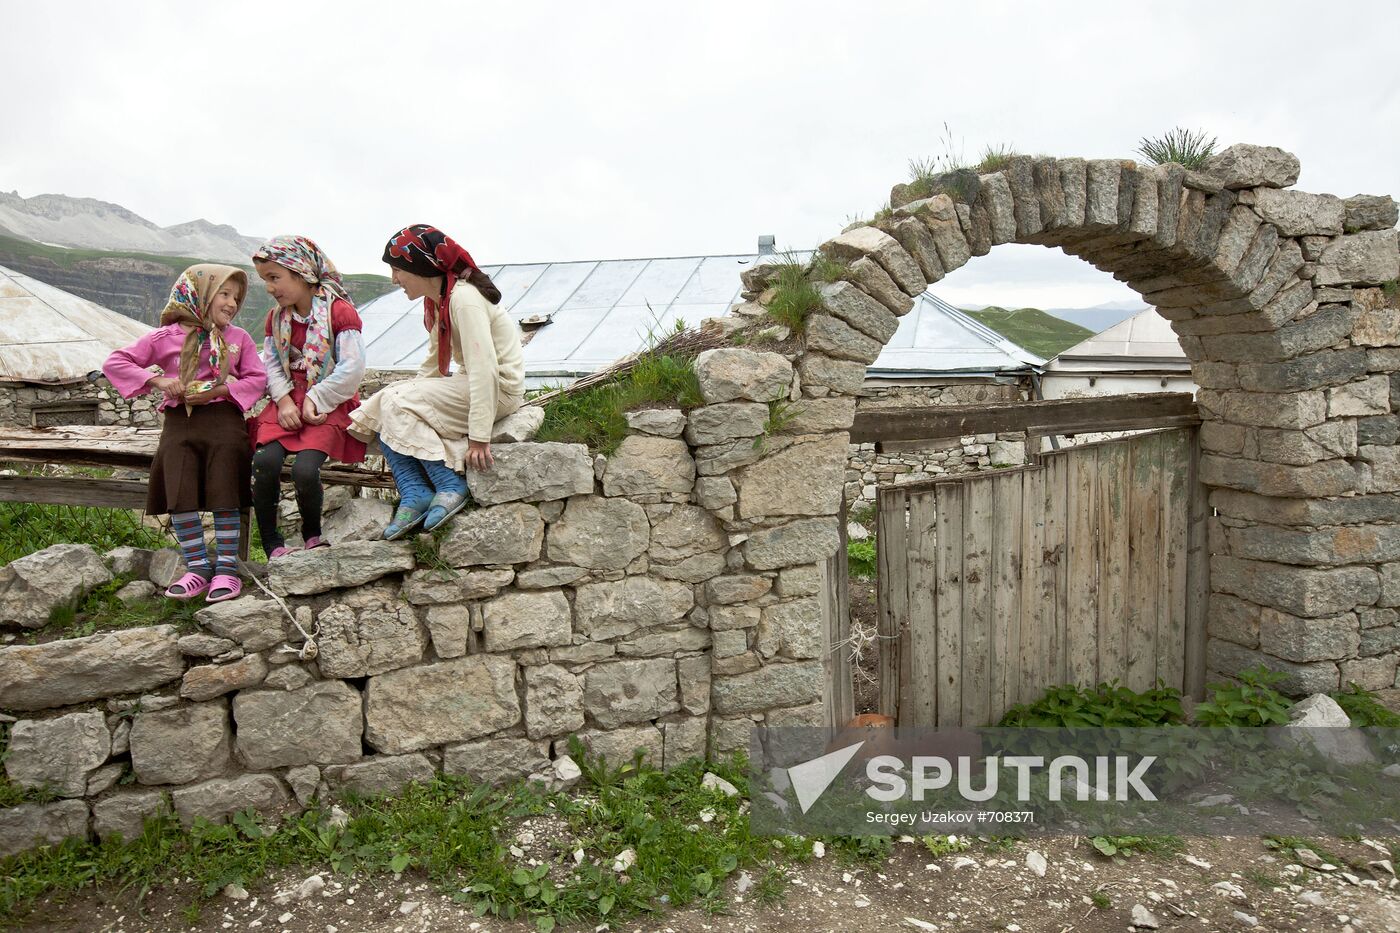 Chanko village in Dagestan